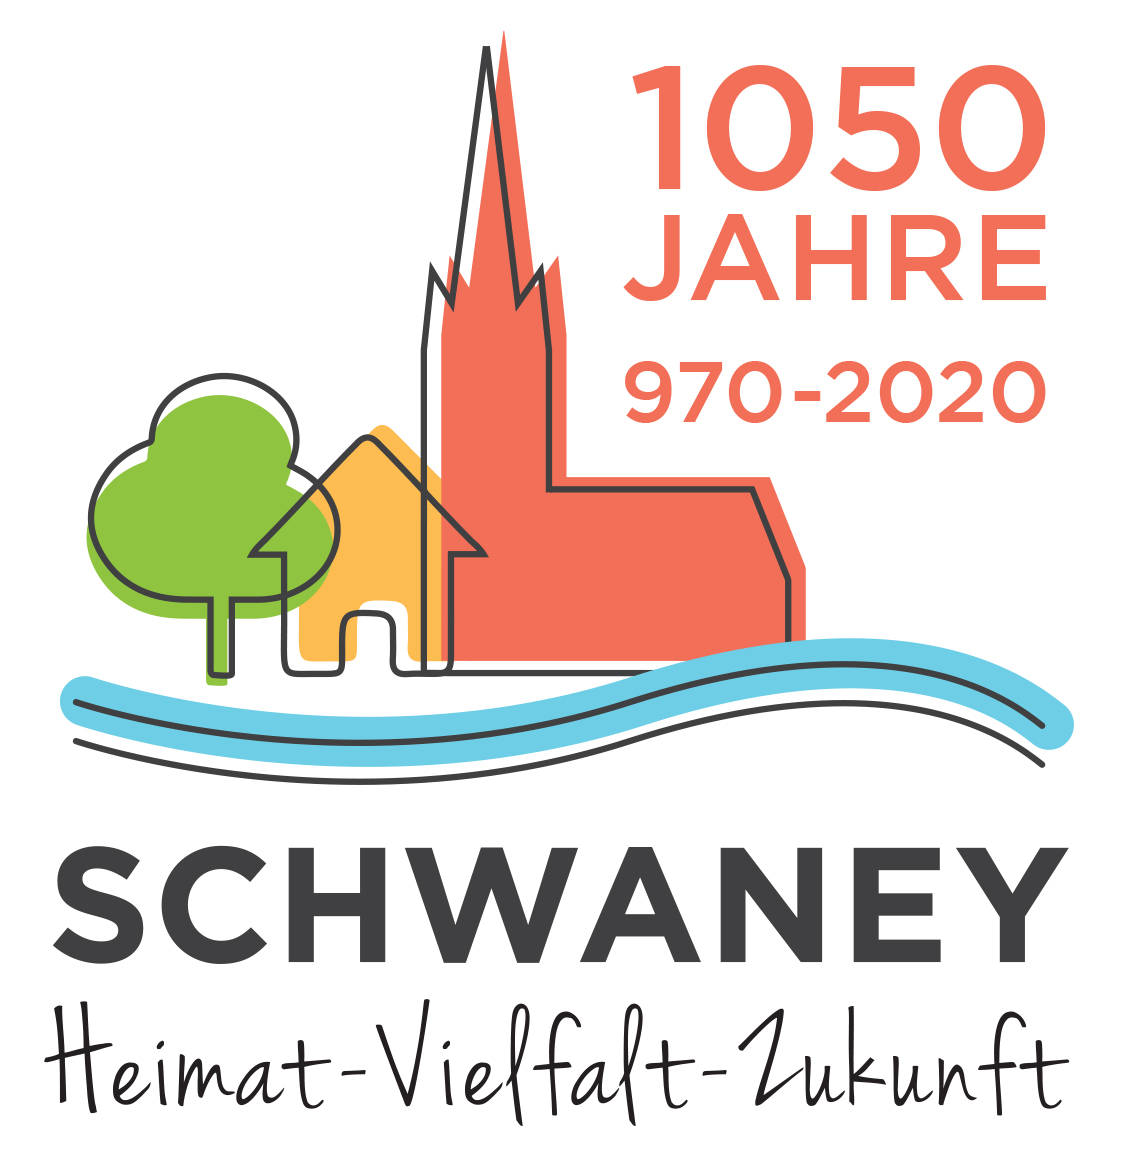 Schwaney Logo 1050